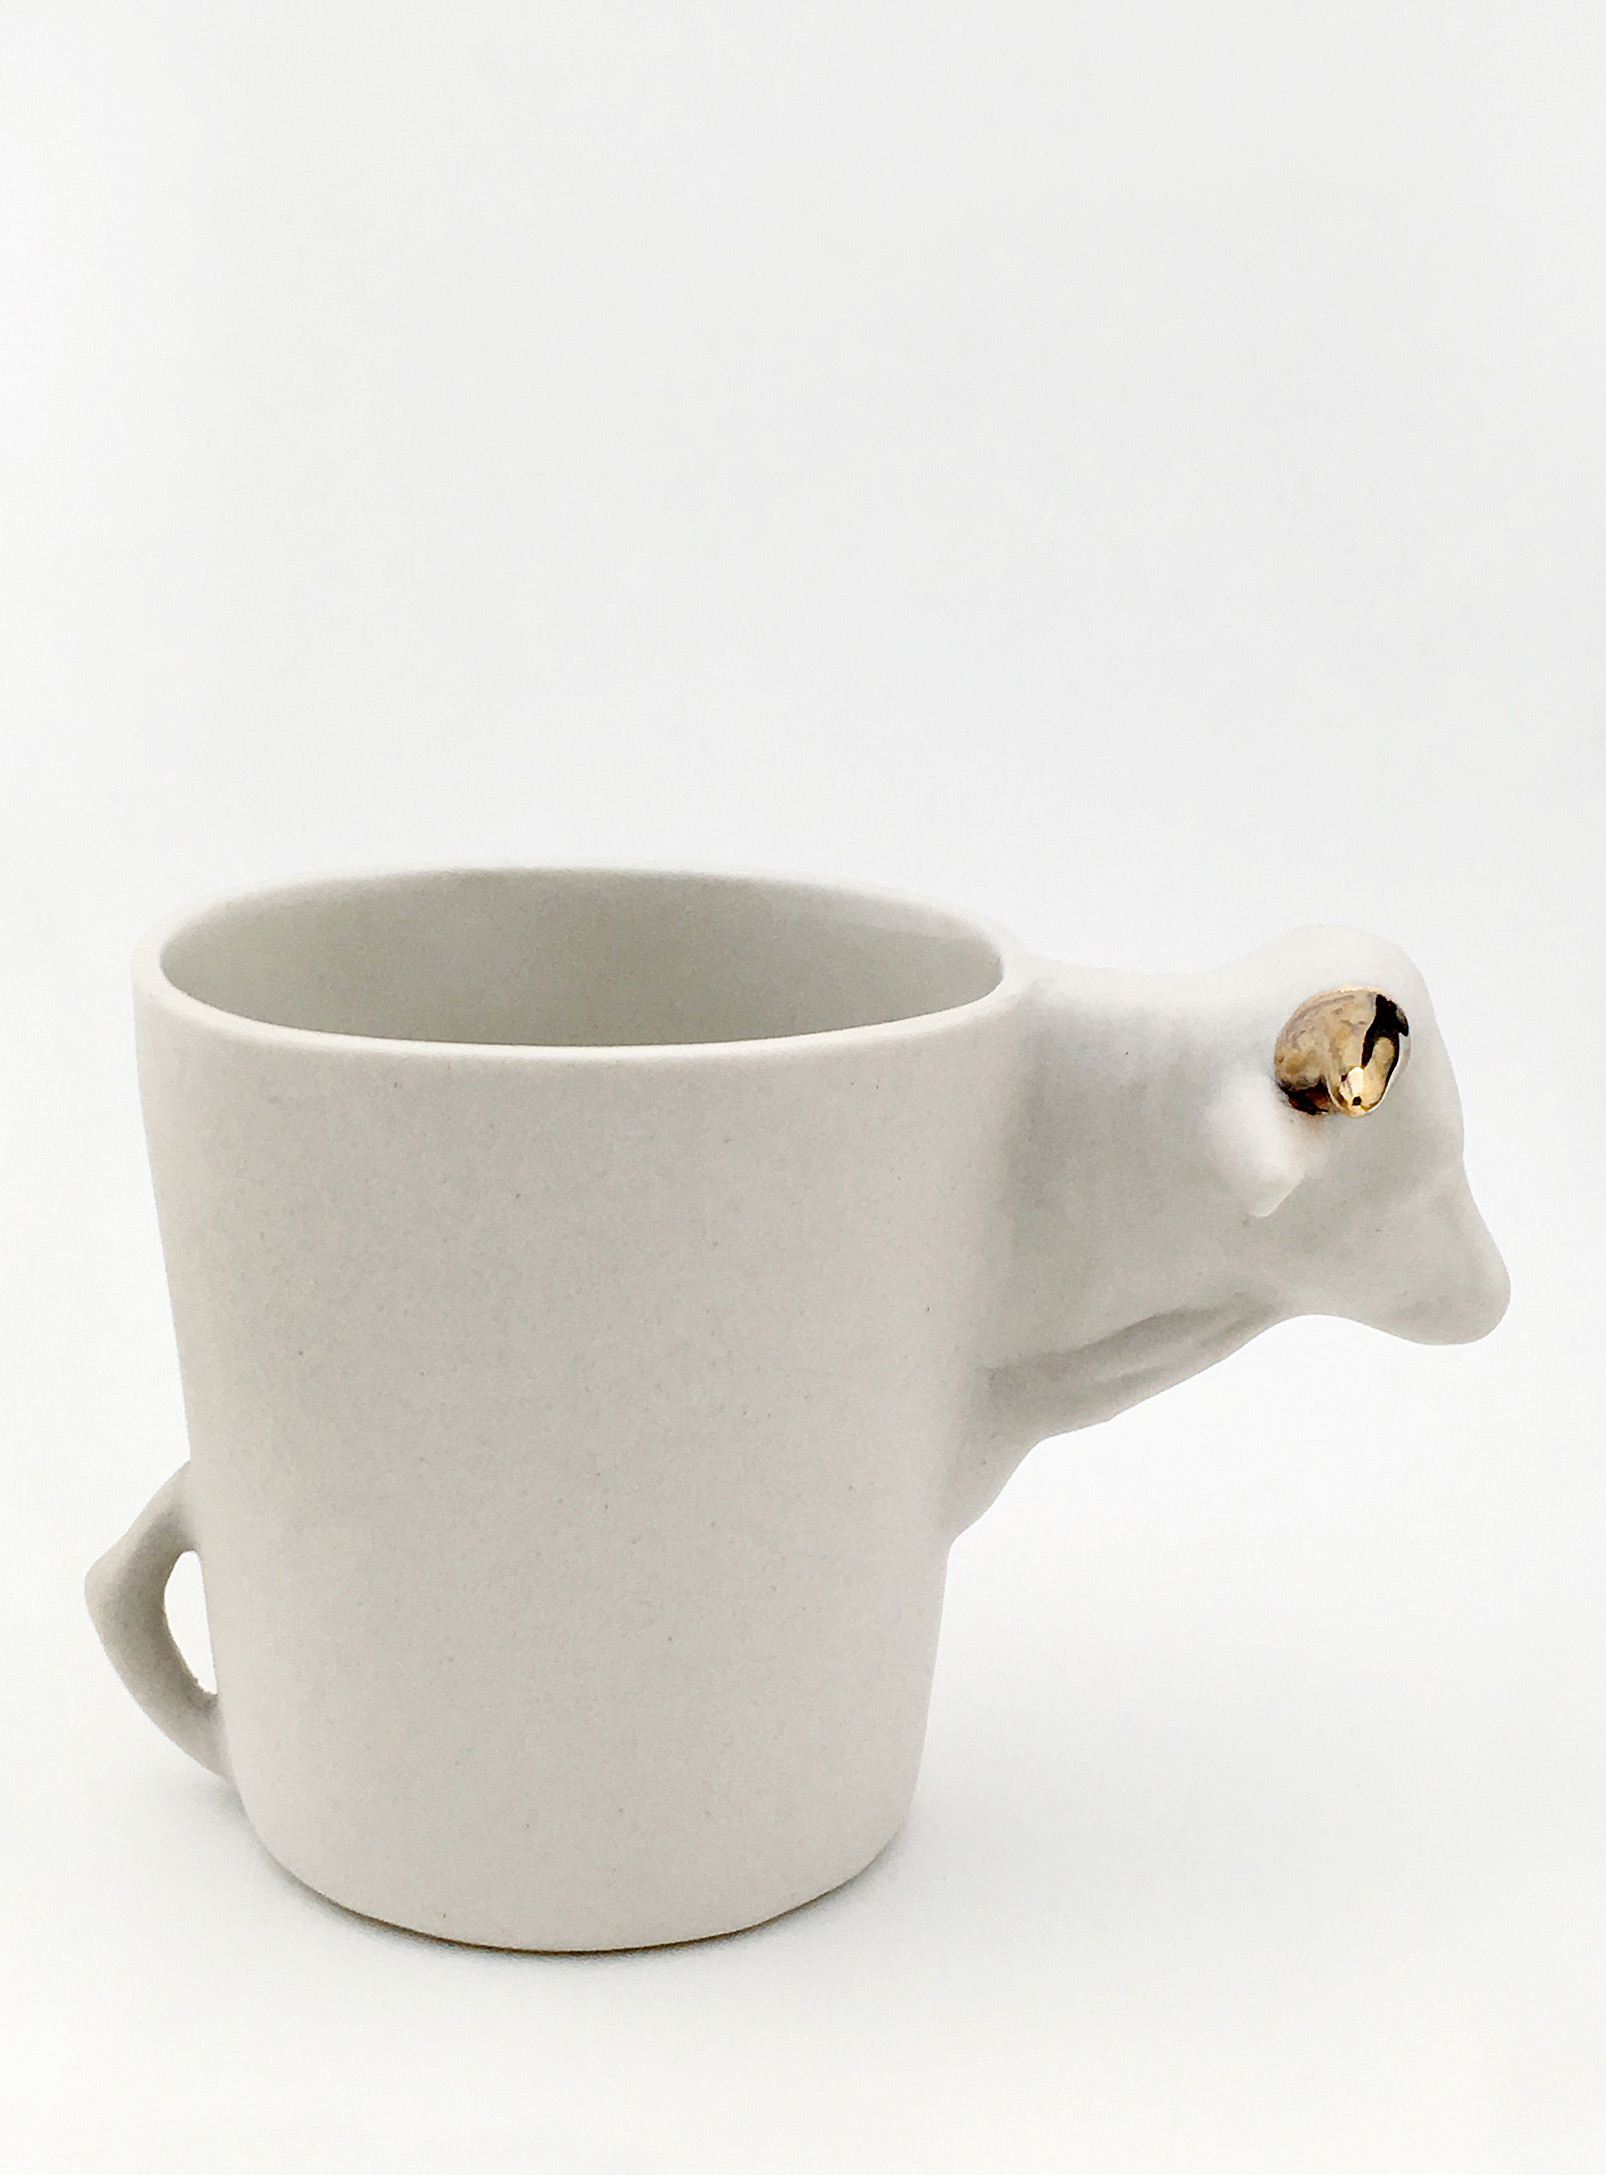 Lola Cera - Classic cow mug Limited series